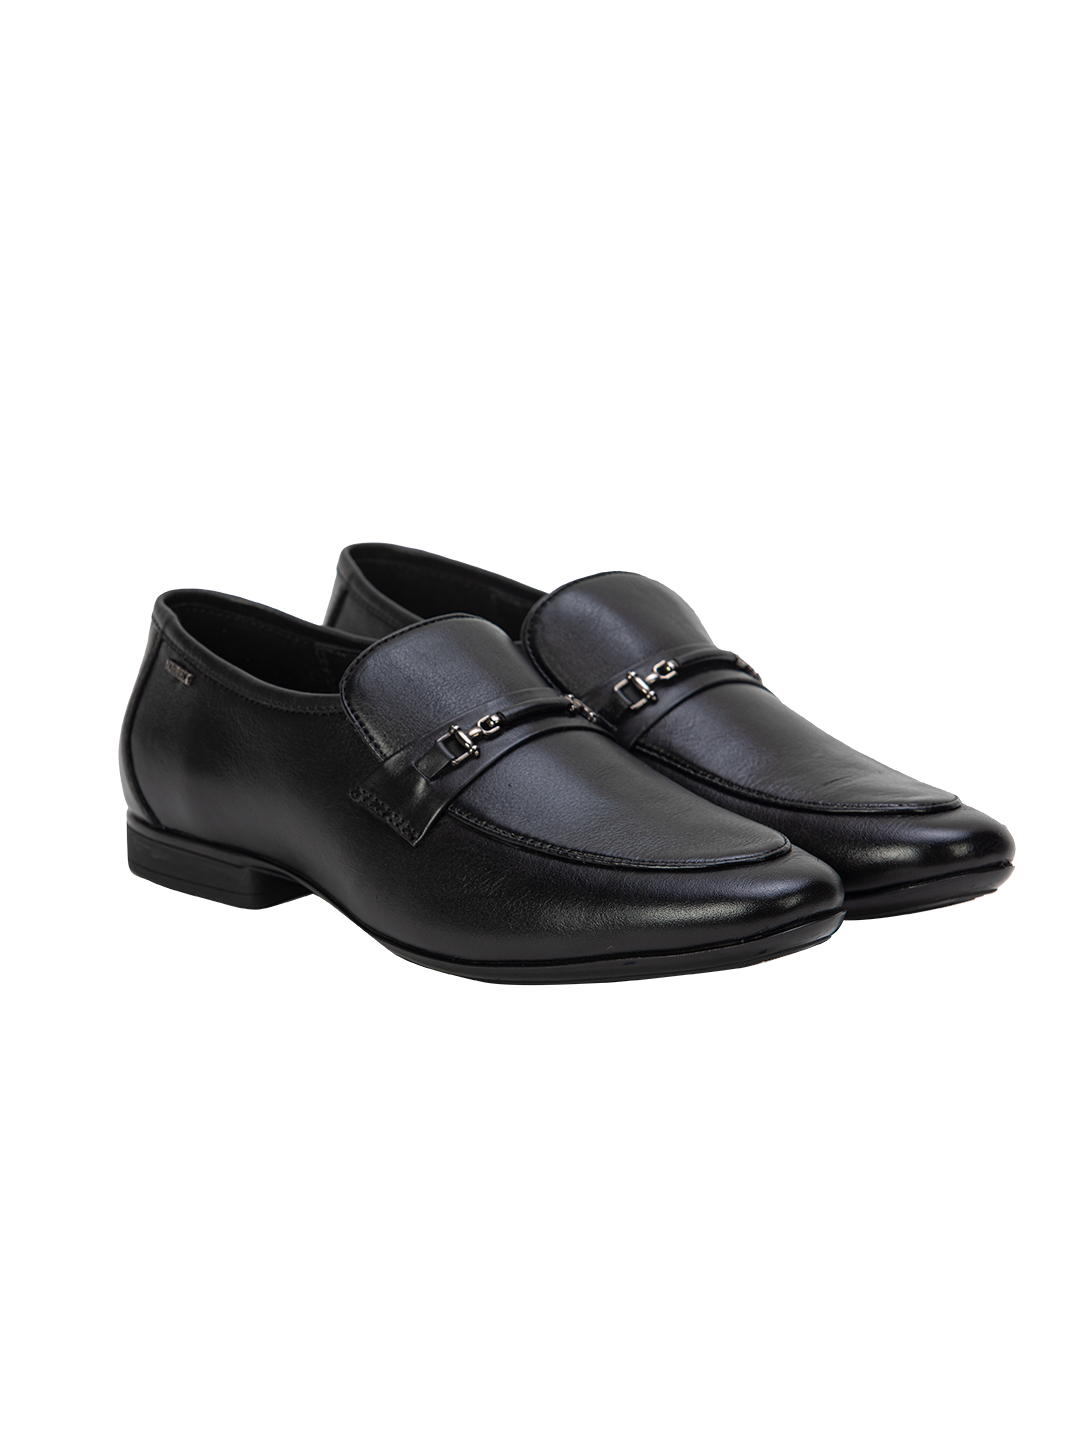 Buy Von Wellx Germany Comfort Black Glib Shoes Online in Bihar